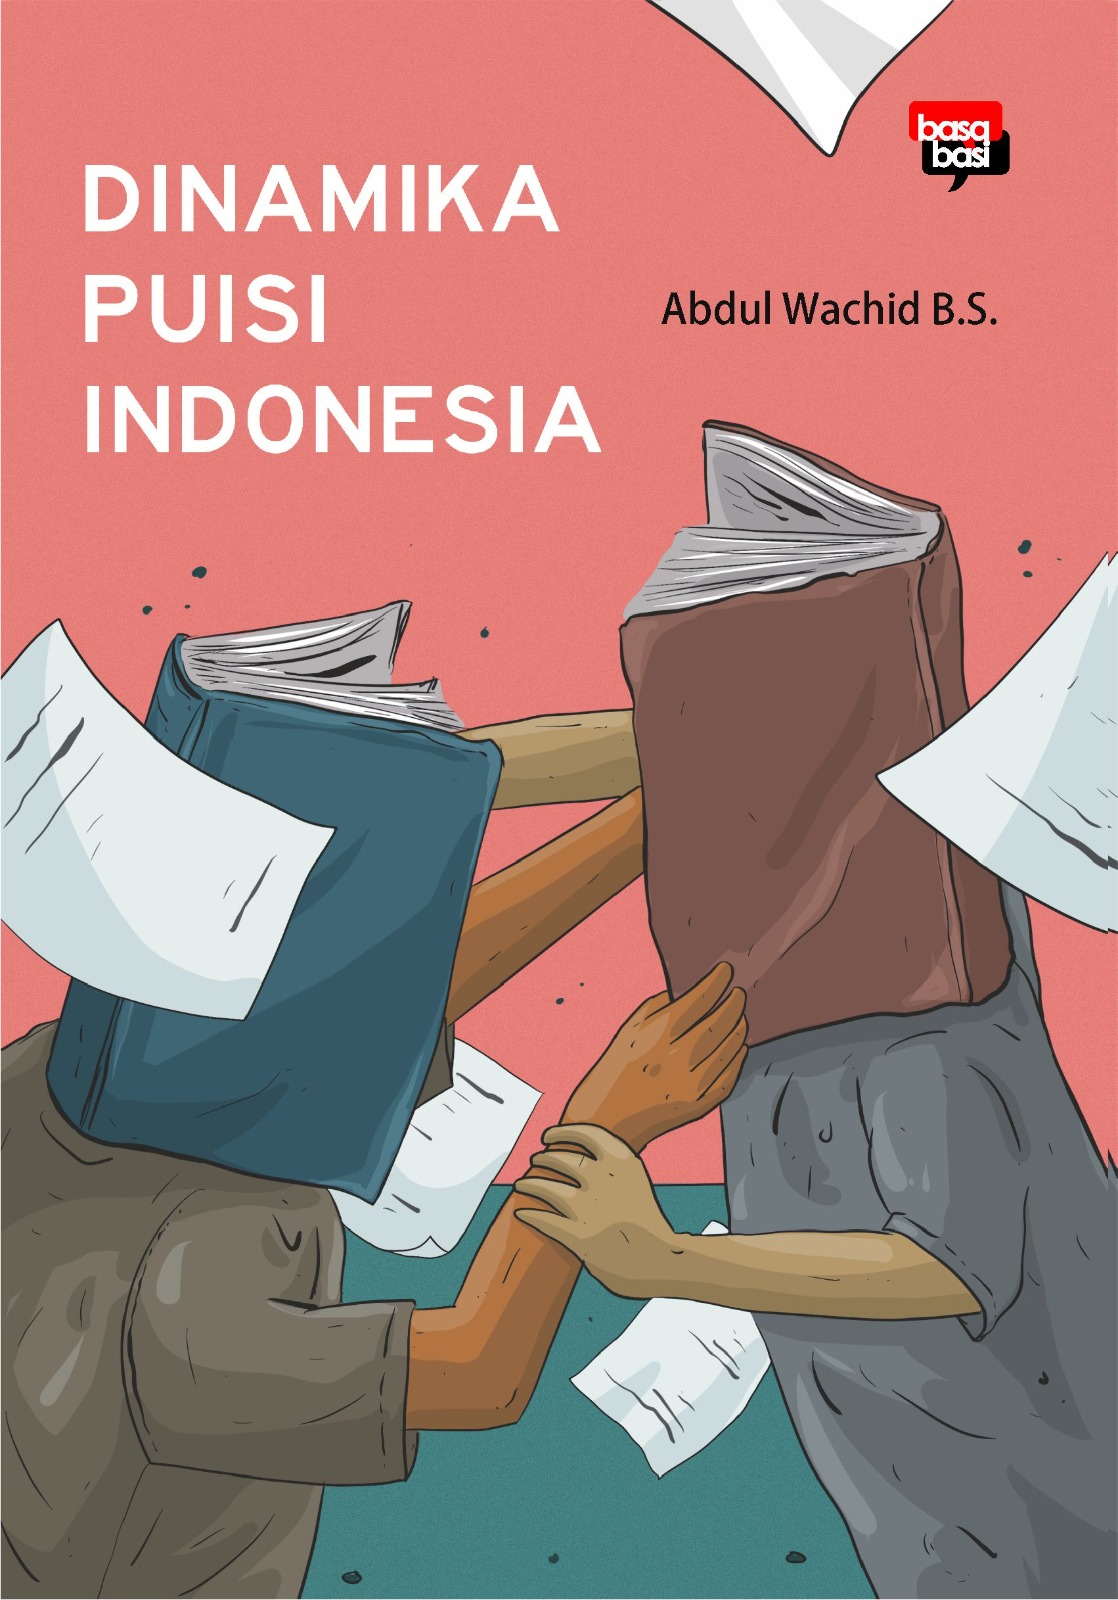 Dinamika puisi Indonesia